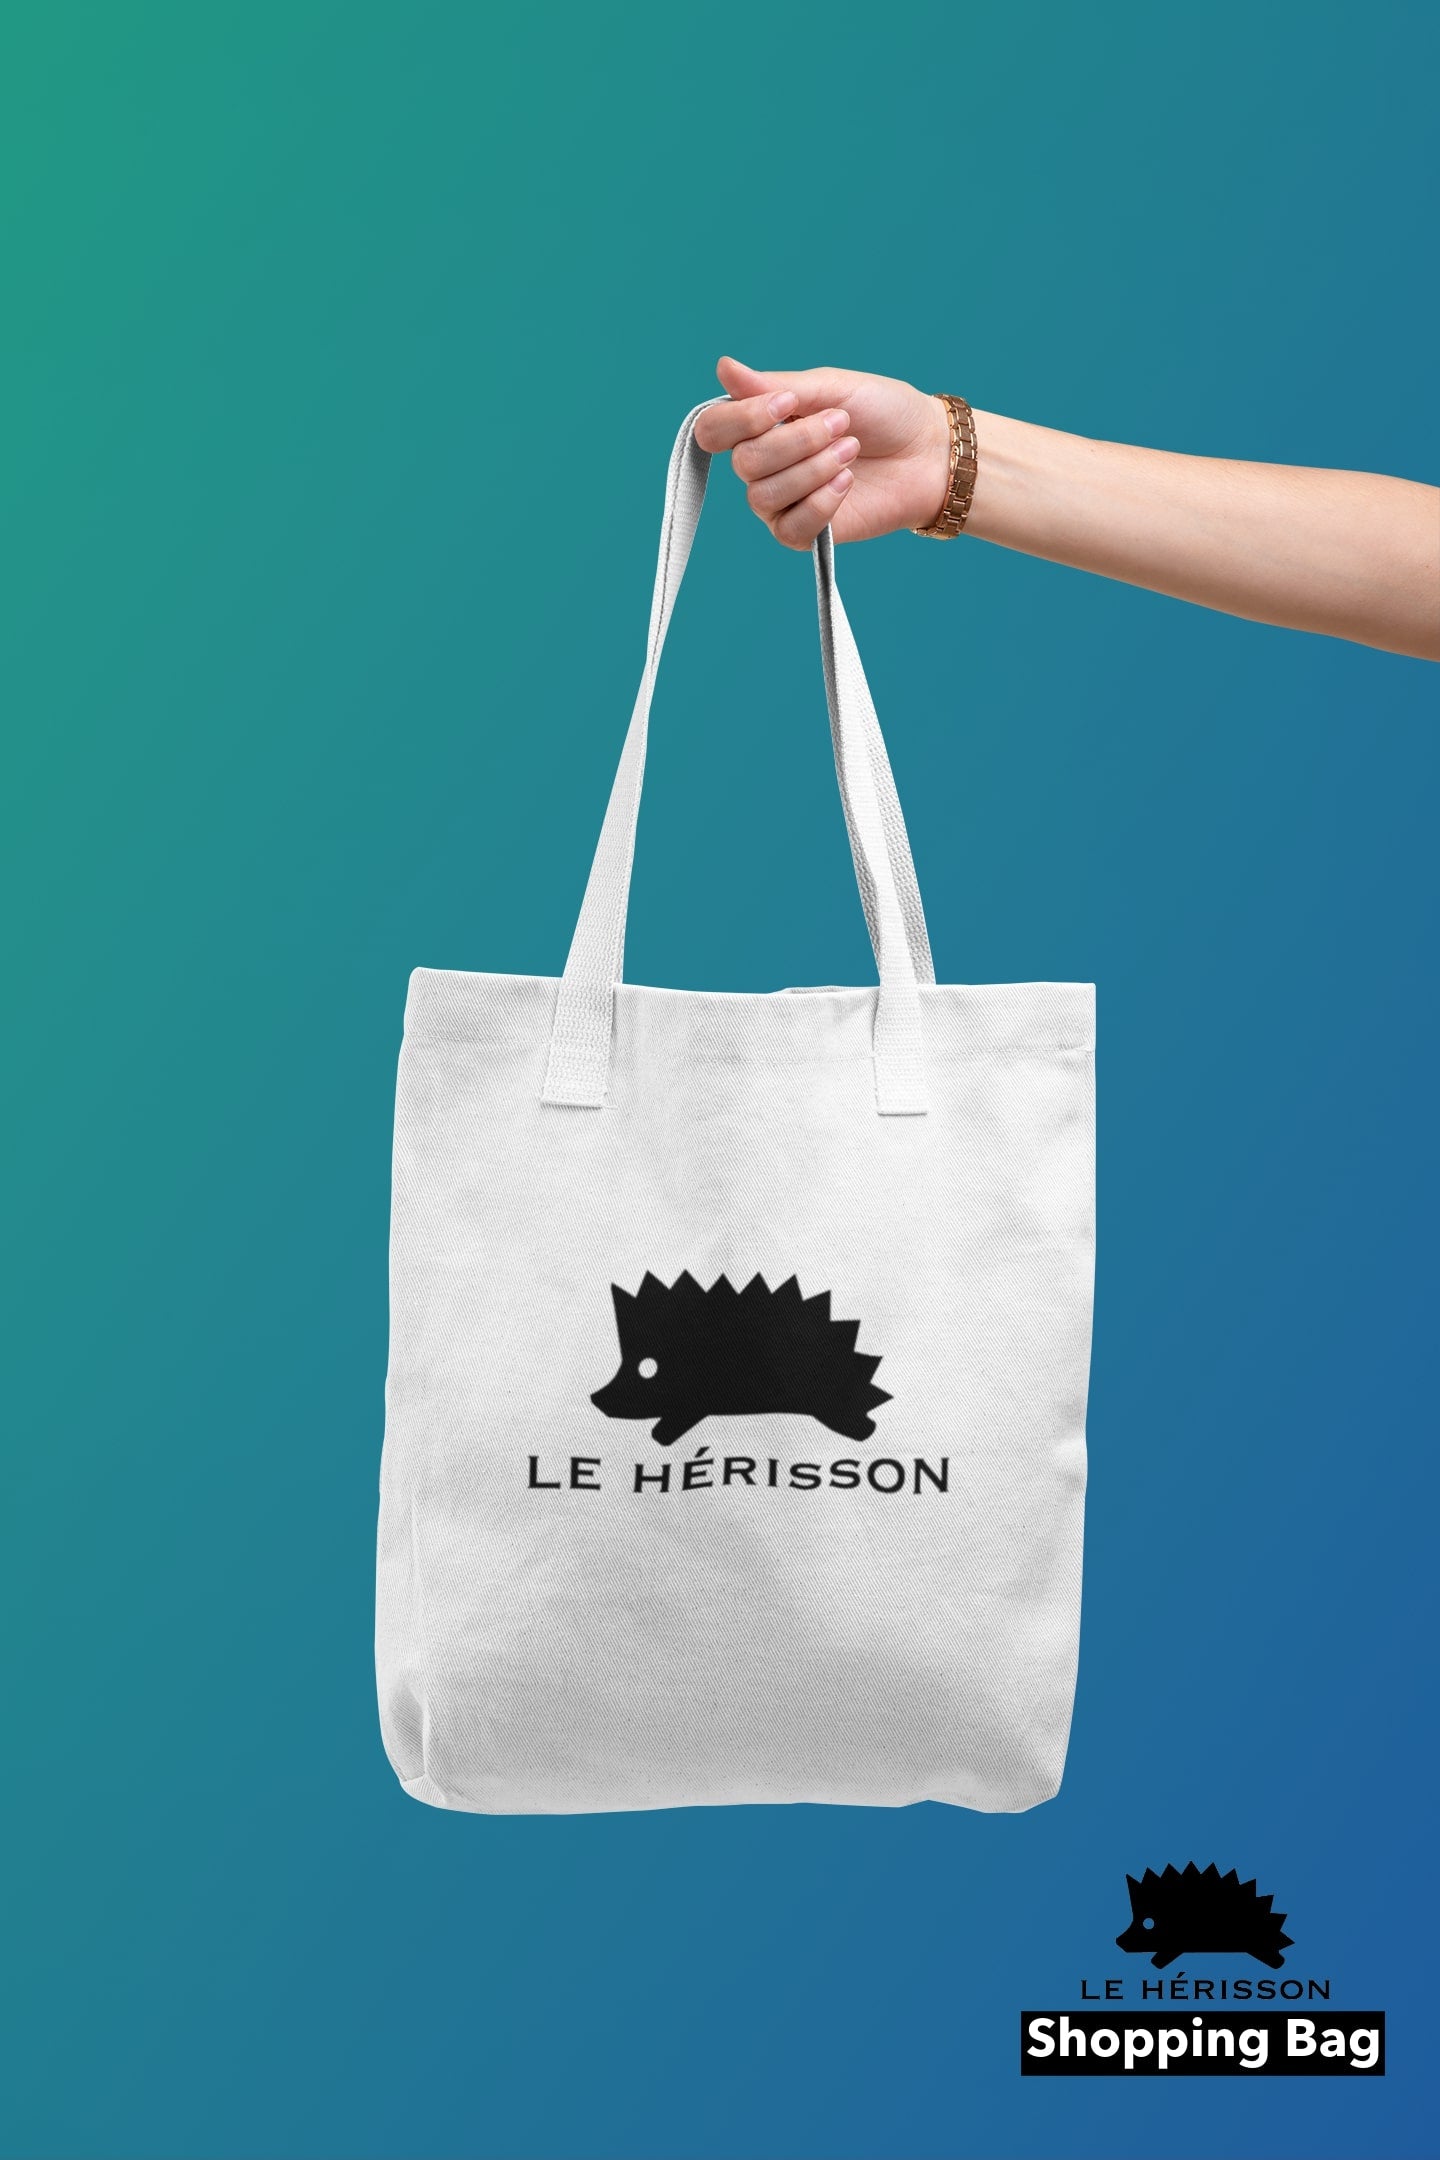 shopping bag bag-al third negroni tutti samples fun gift idea